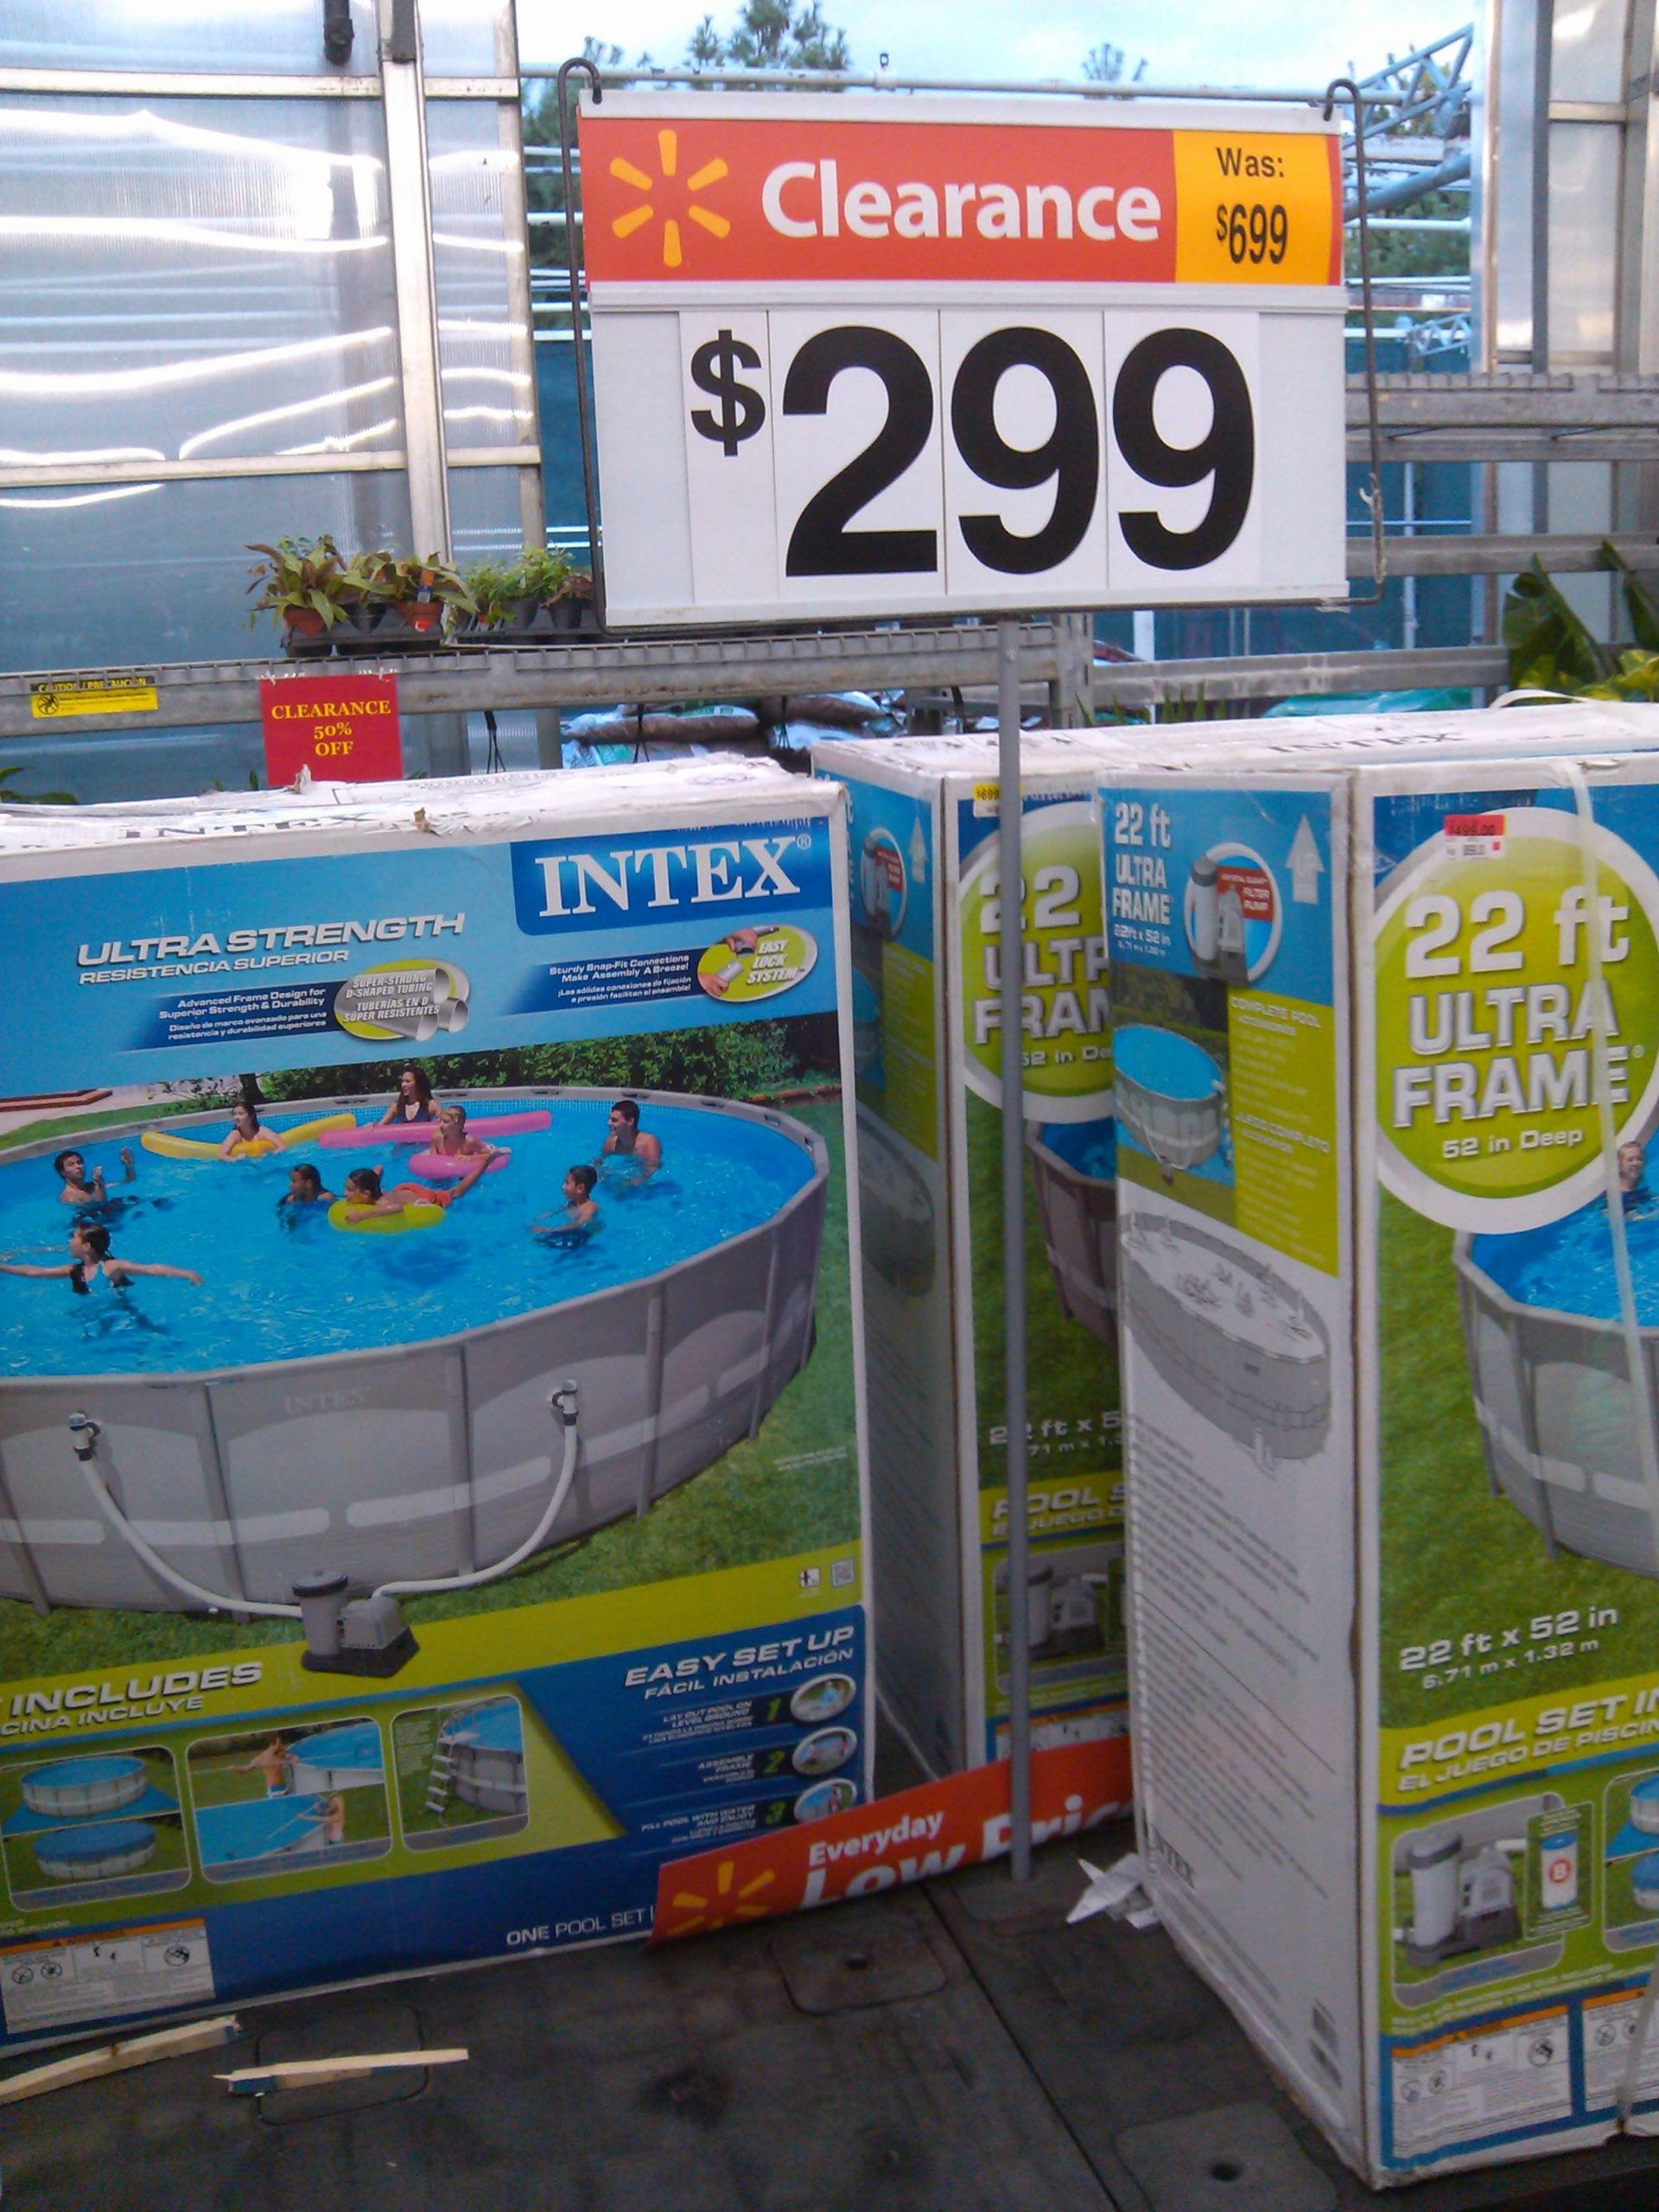 Walmart Above Ground Pool
 ground swimming pool prices at Walmart slashed in